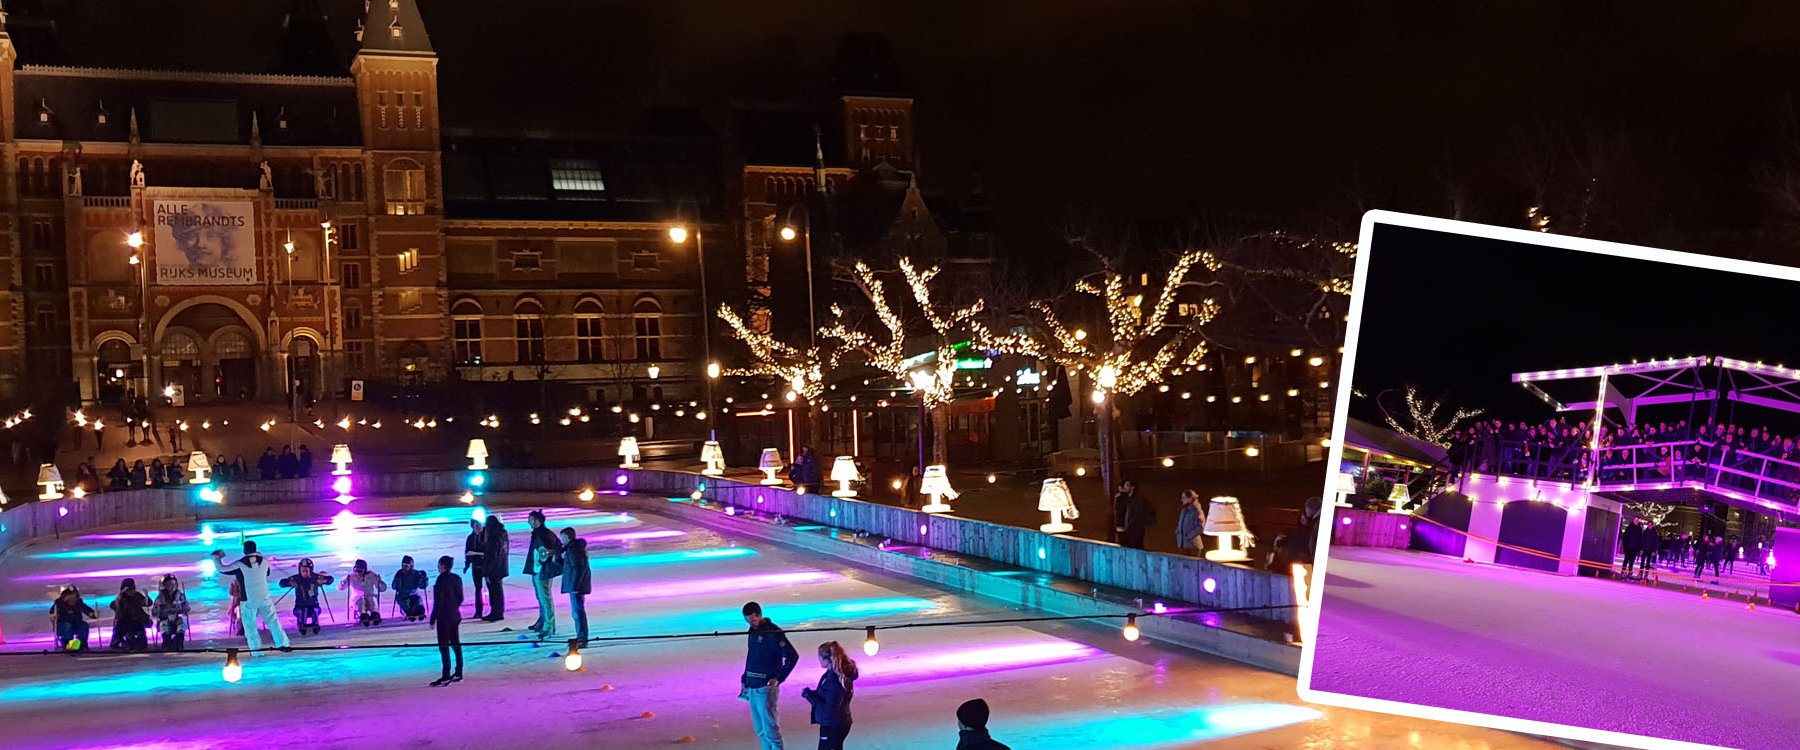 Ice Amsterdam museumplein